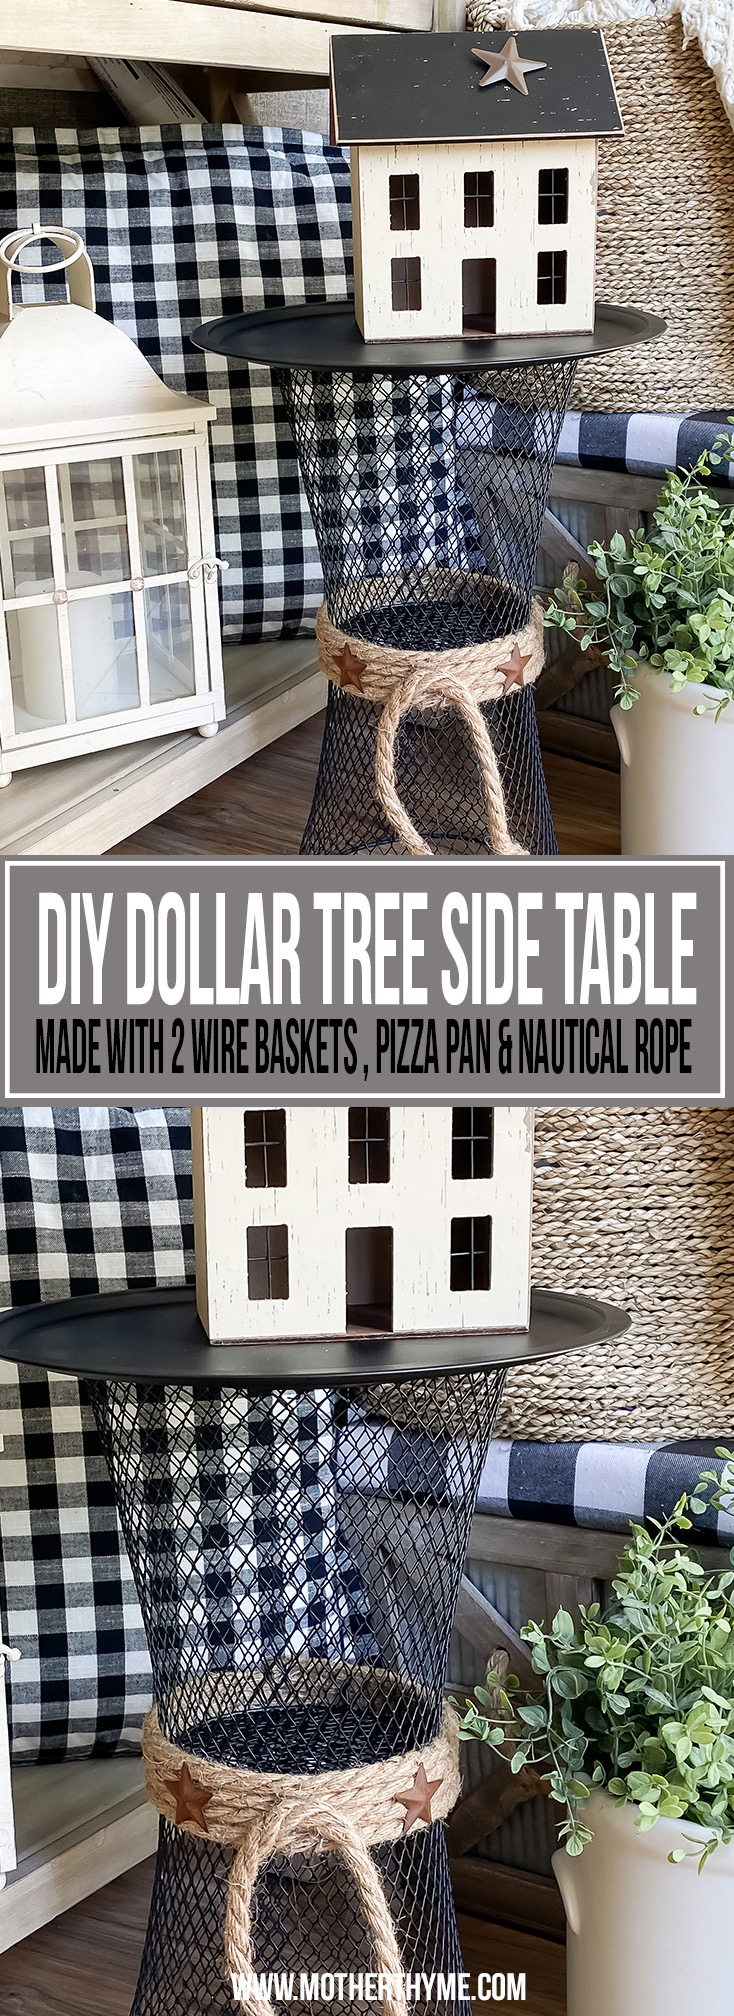 DIY DOLLAR TREE SIDE TABLE